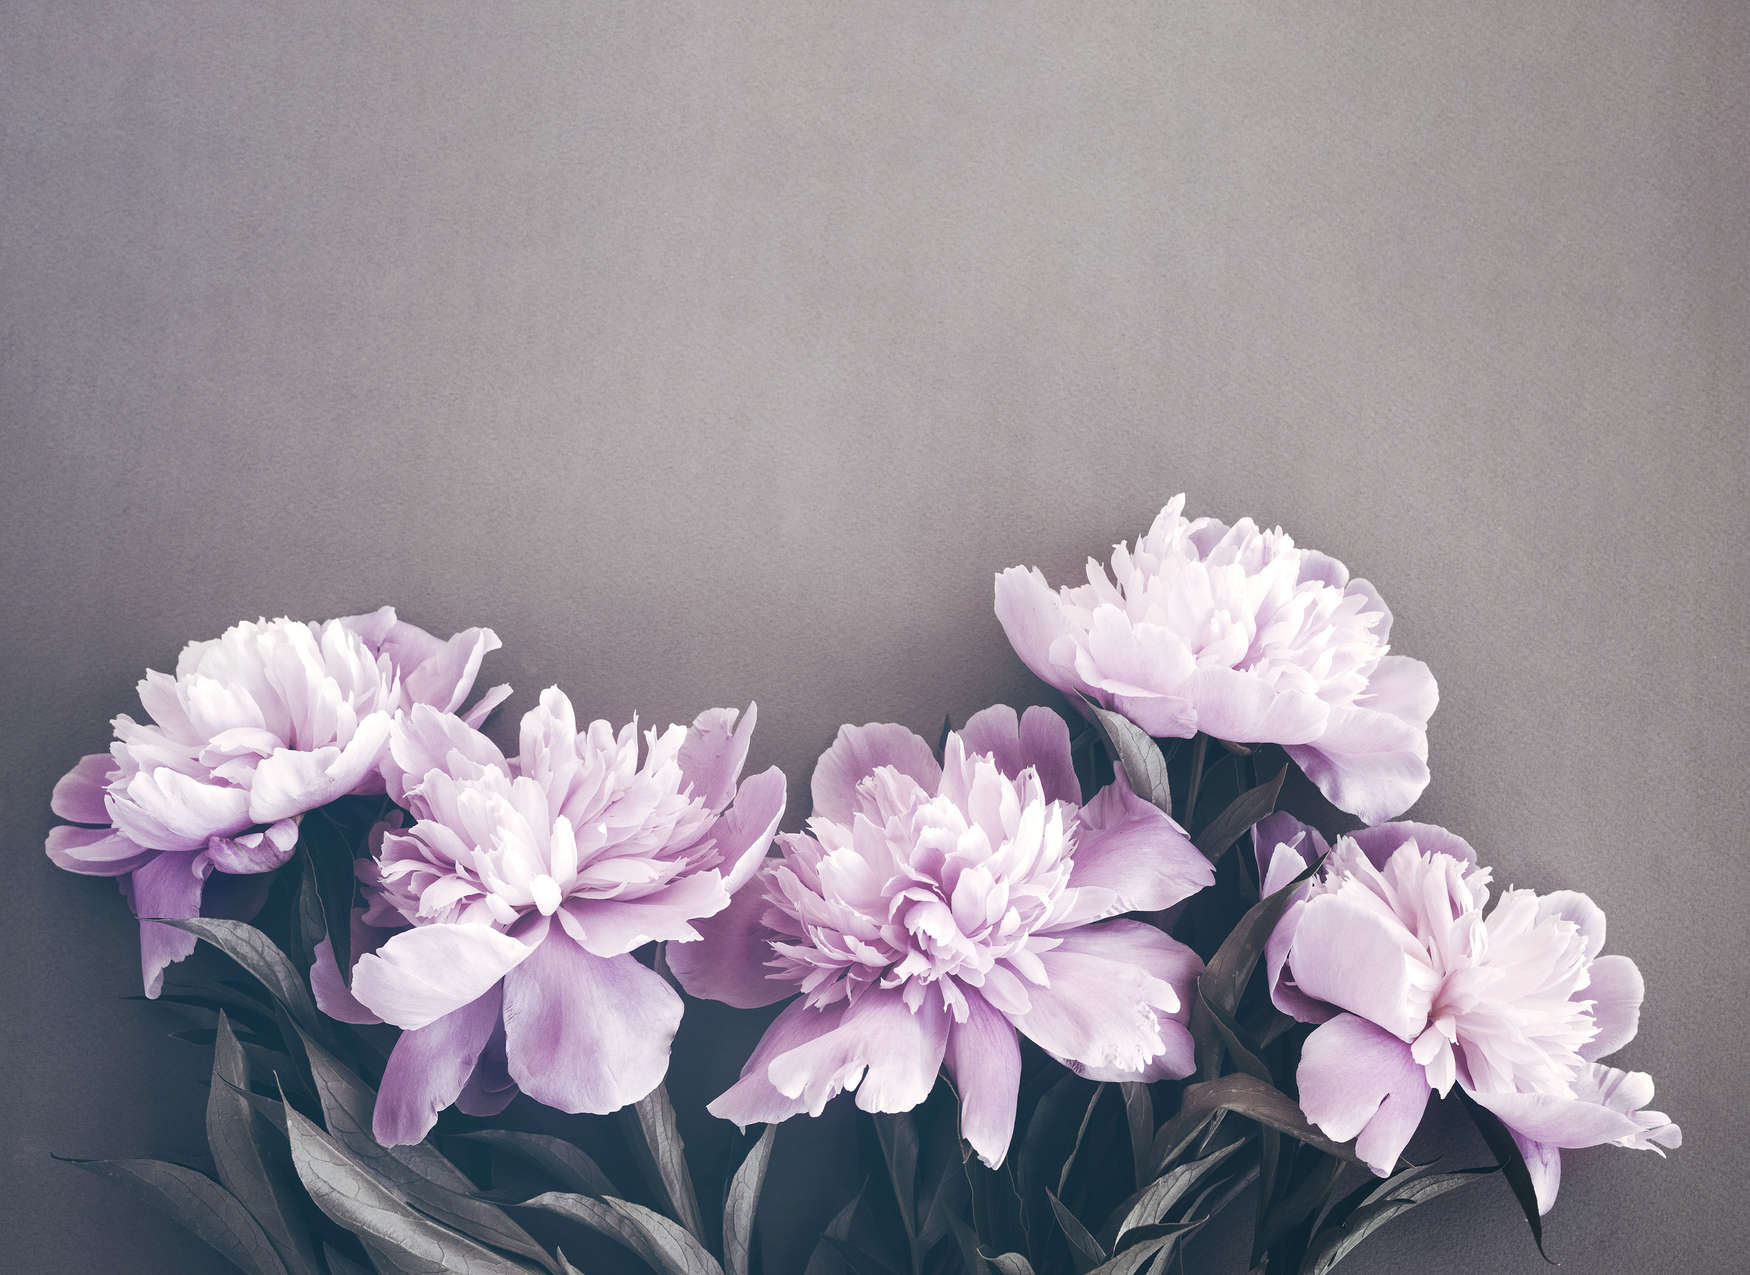             Fototapete Pfingstrosen florales Muster – Rosa, Grau
        